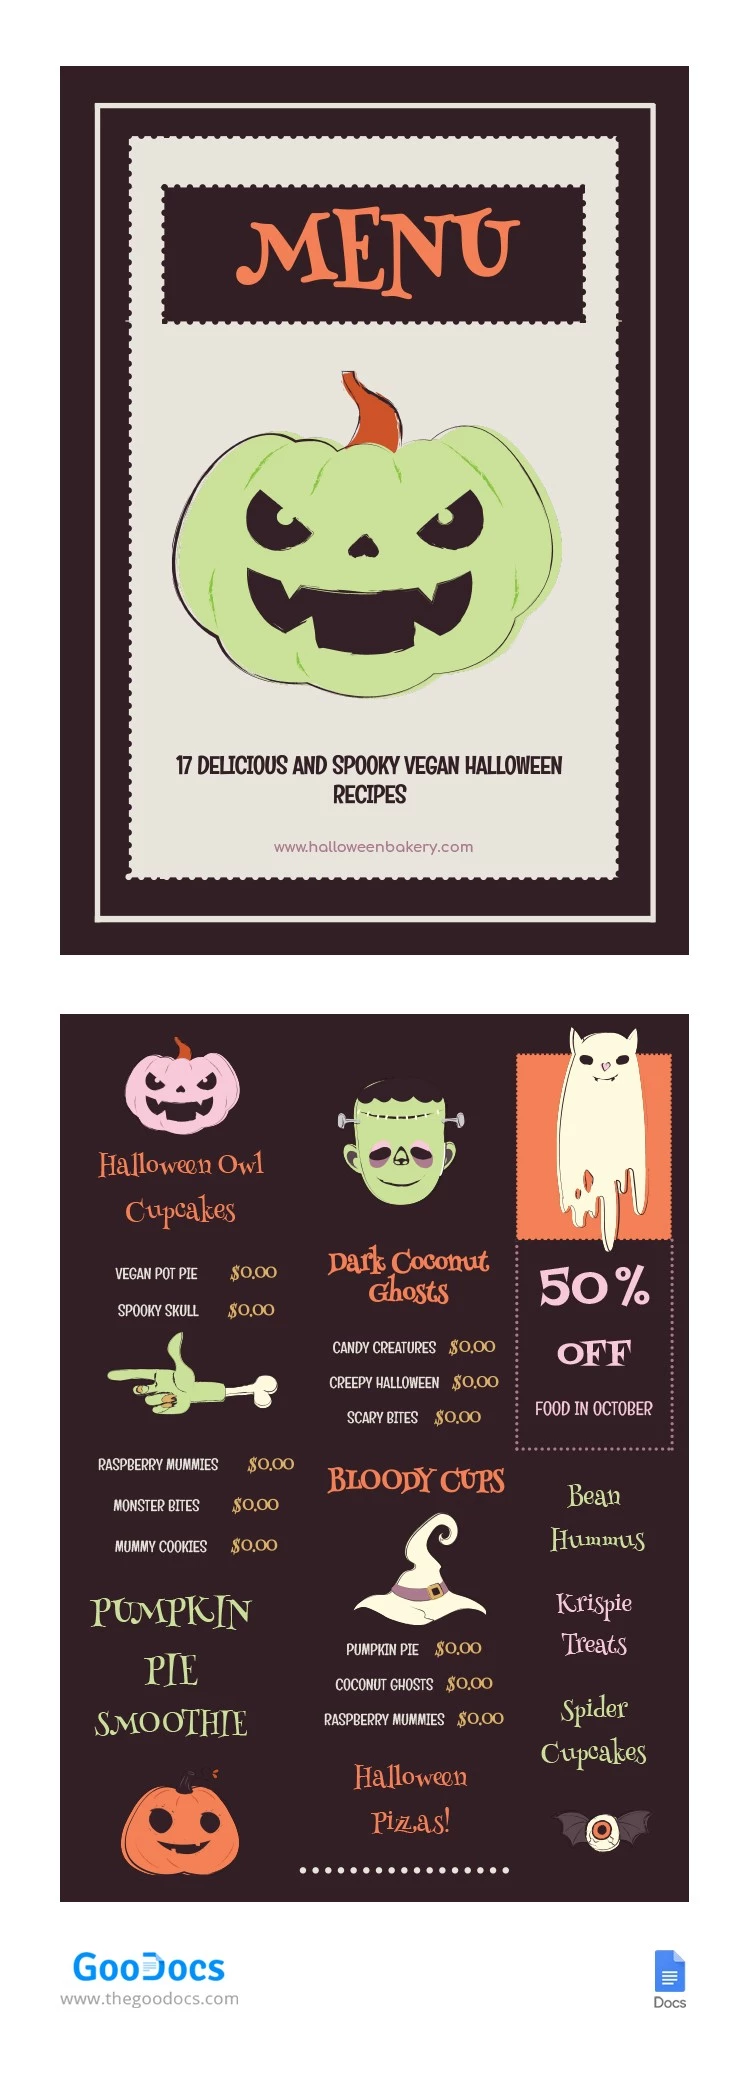 Menú de Halloween - free Google Docs Template - 10062162